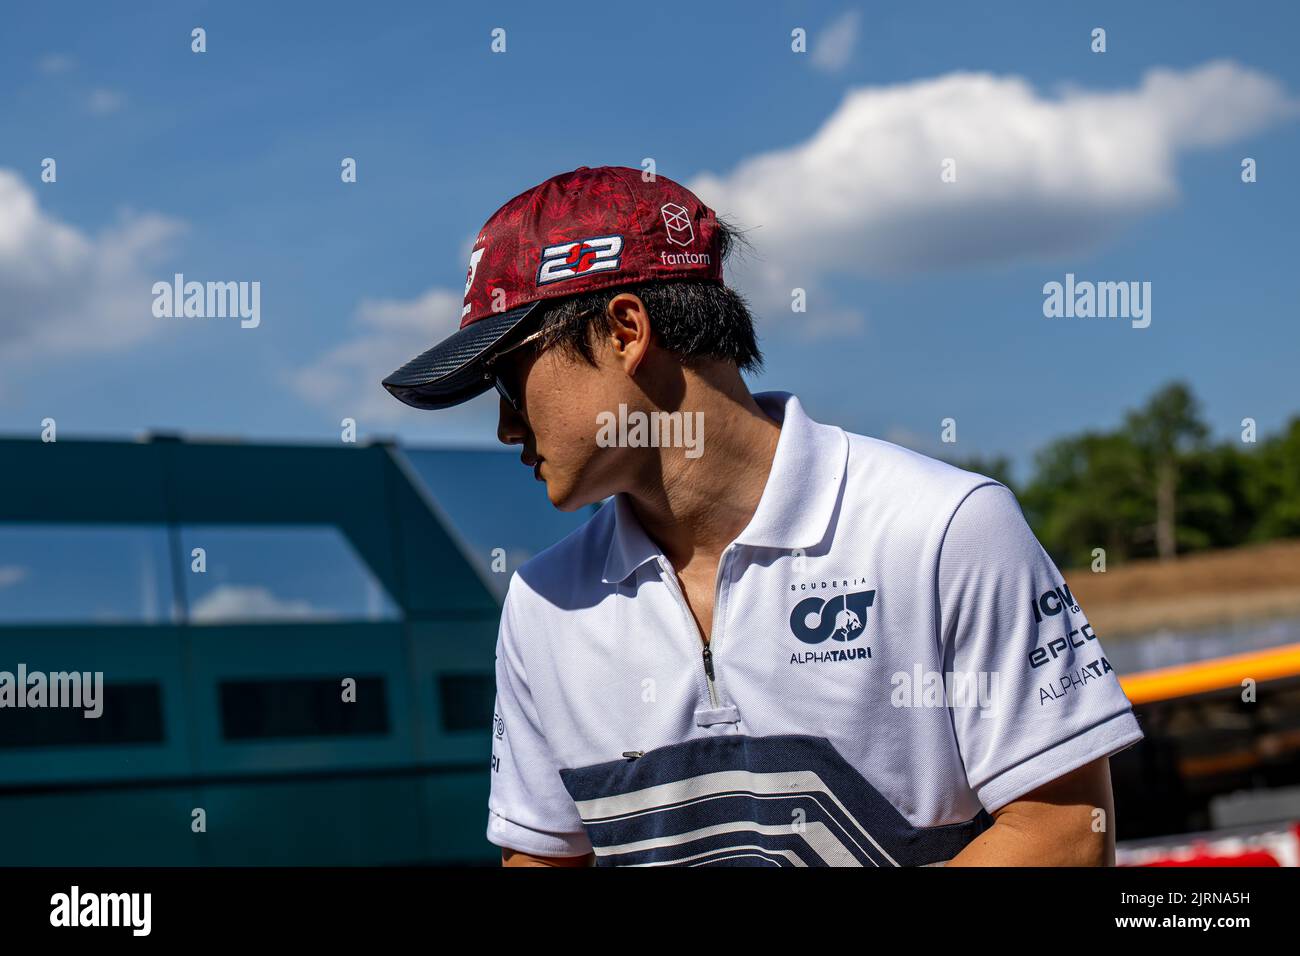 Stavelot, Belgium, 25th Aug 2022, Yuki Tsunoda, from Japan competes for Scuderia AlphaTauri. The build up, round 14 of the 2022 Formula 1 championship. Credit: Michael Potts/Alamy Live News Stock Photo